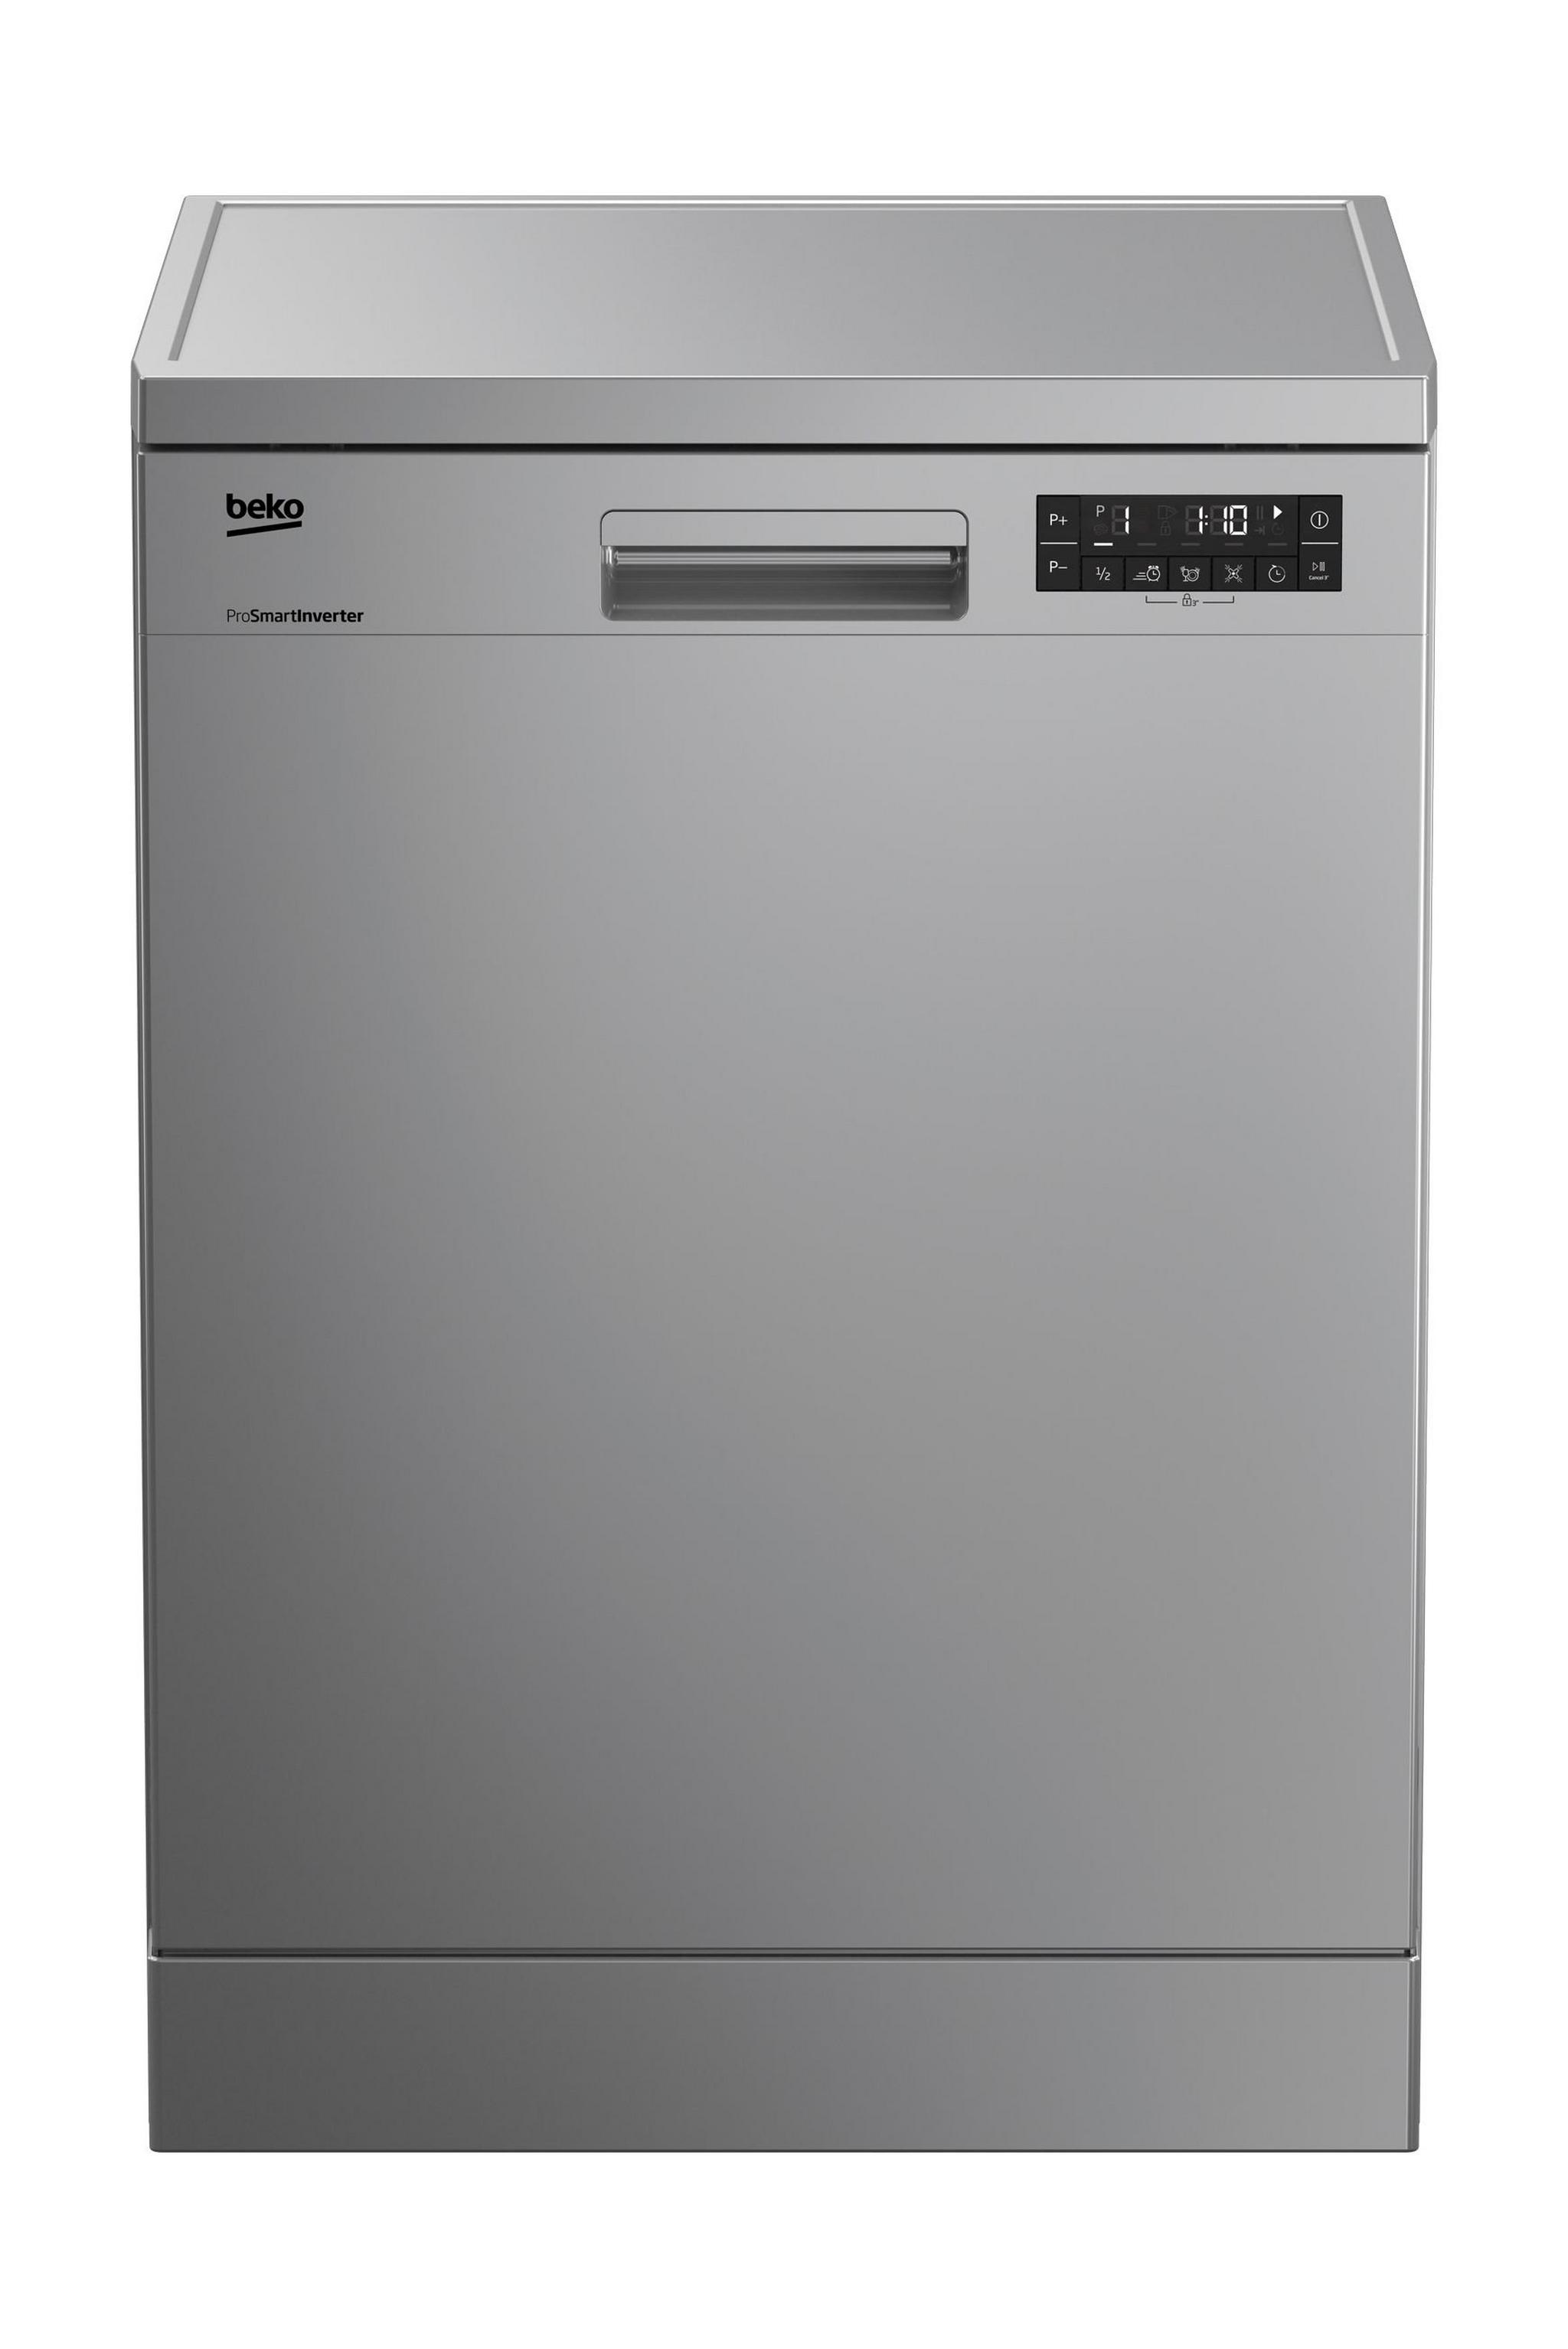 Beko 8 Program Free Standing Dishwasher - Silver (DFN28320S)